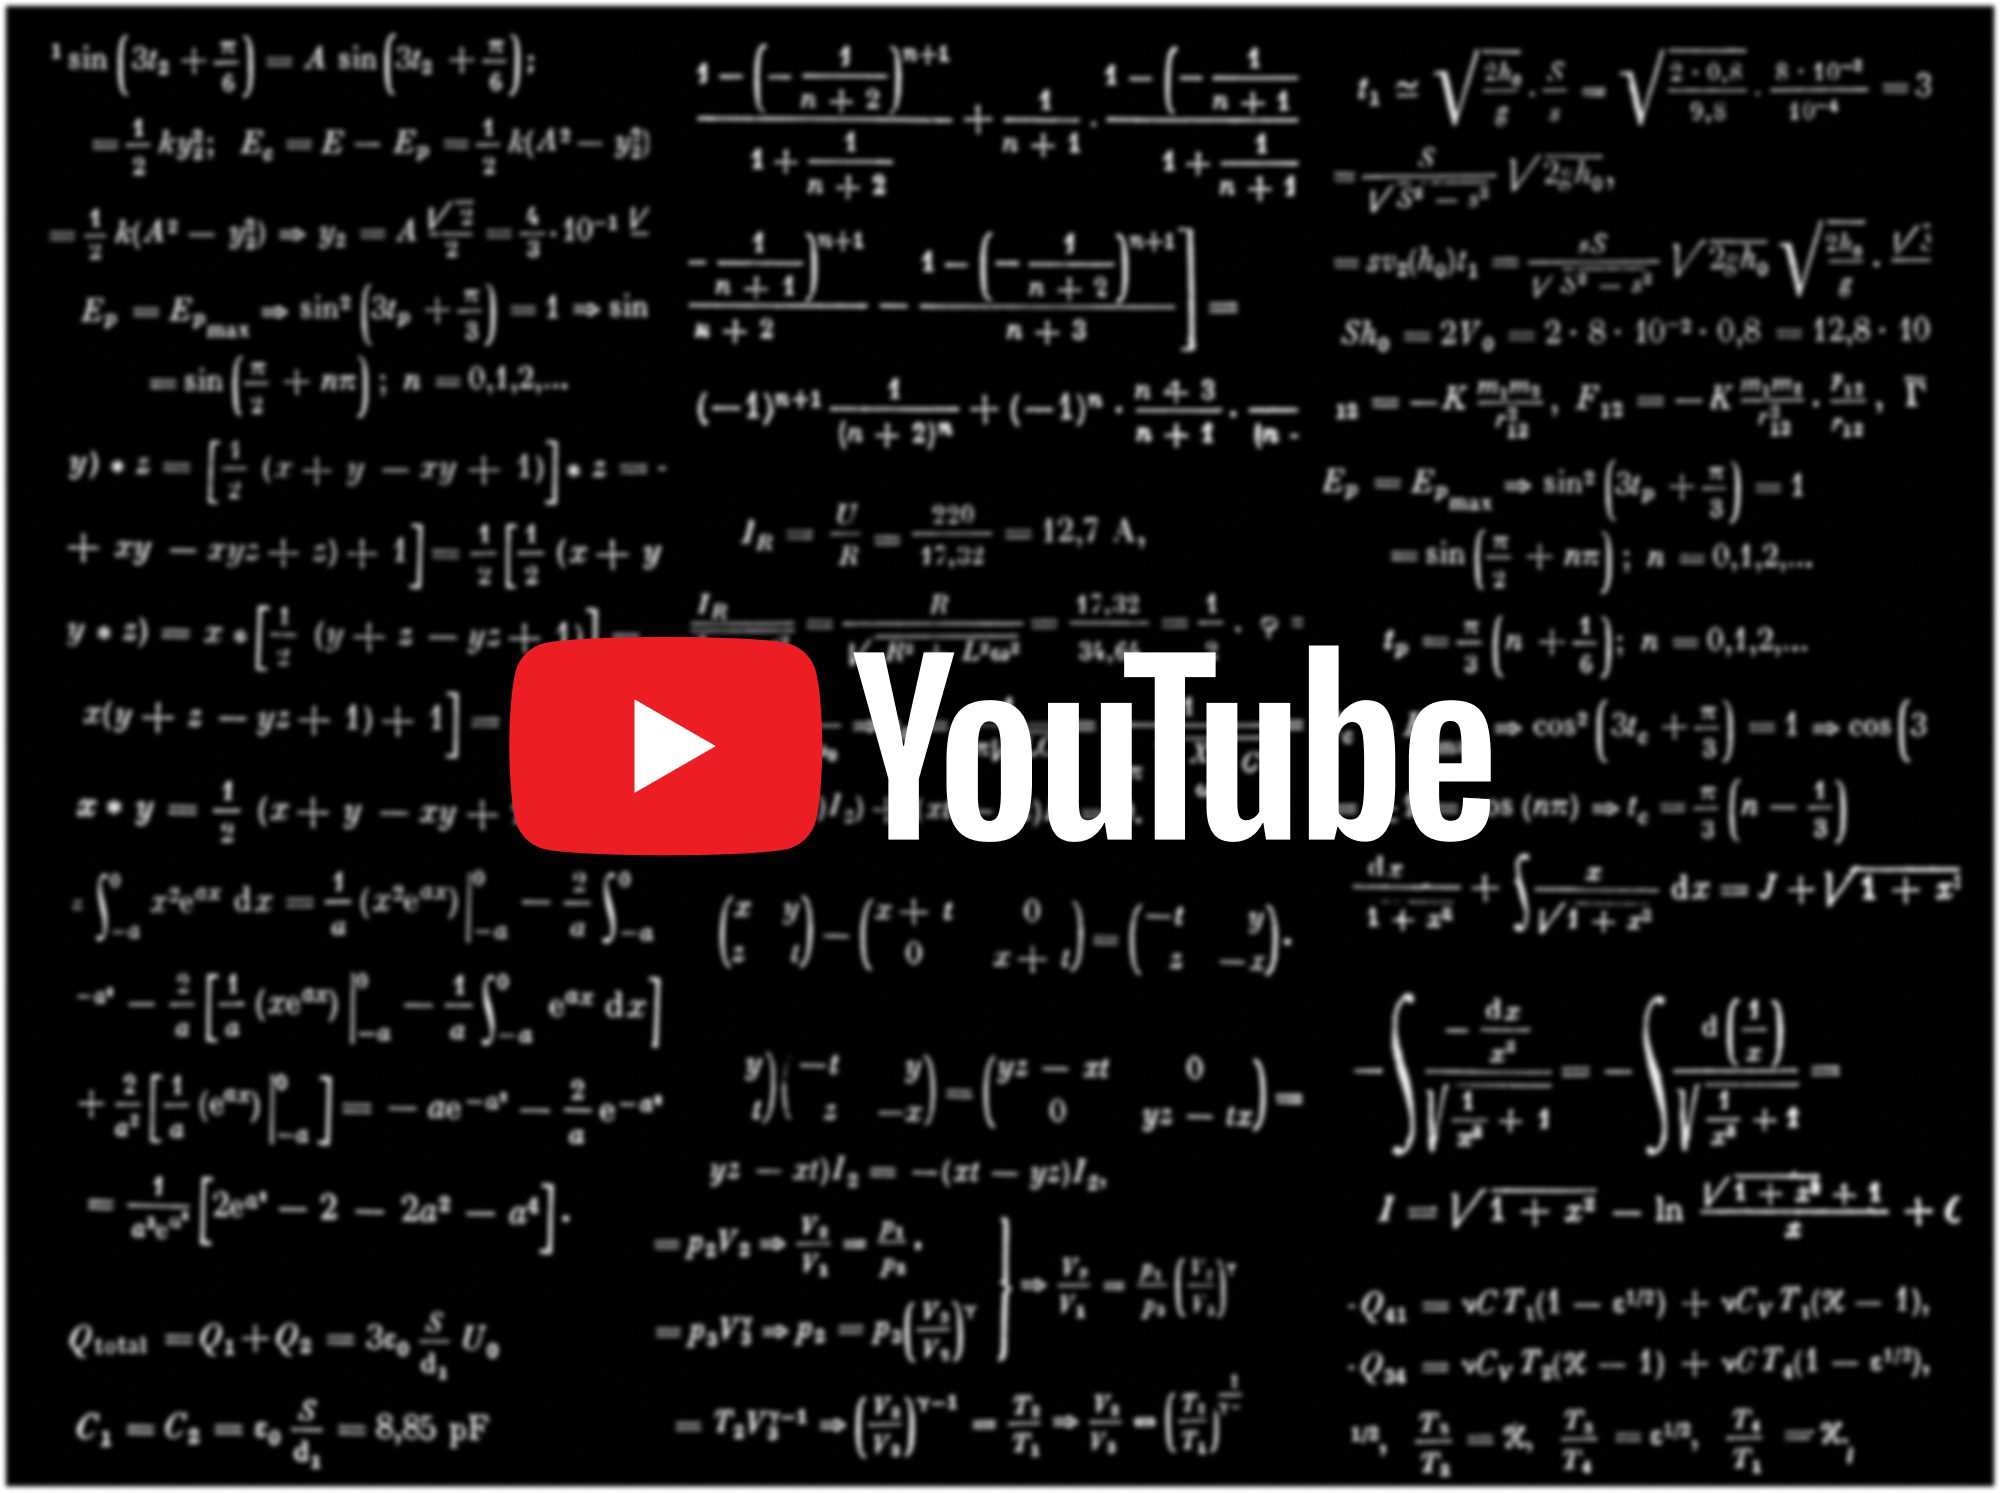 Fånga din nyfikenhet med matematik på vår YouTube-kanal!